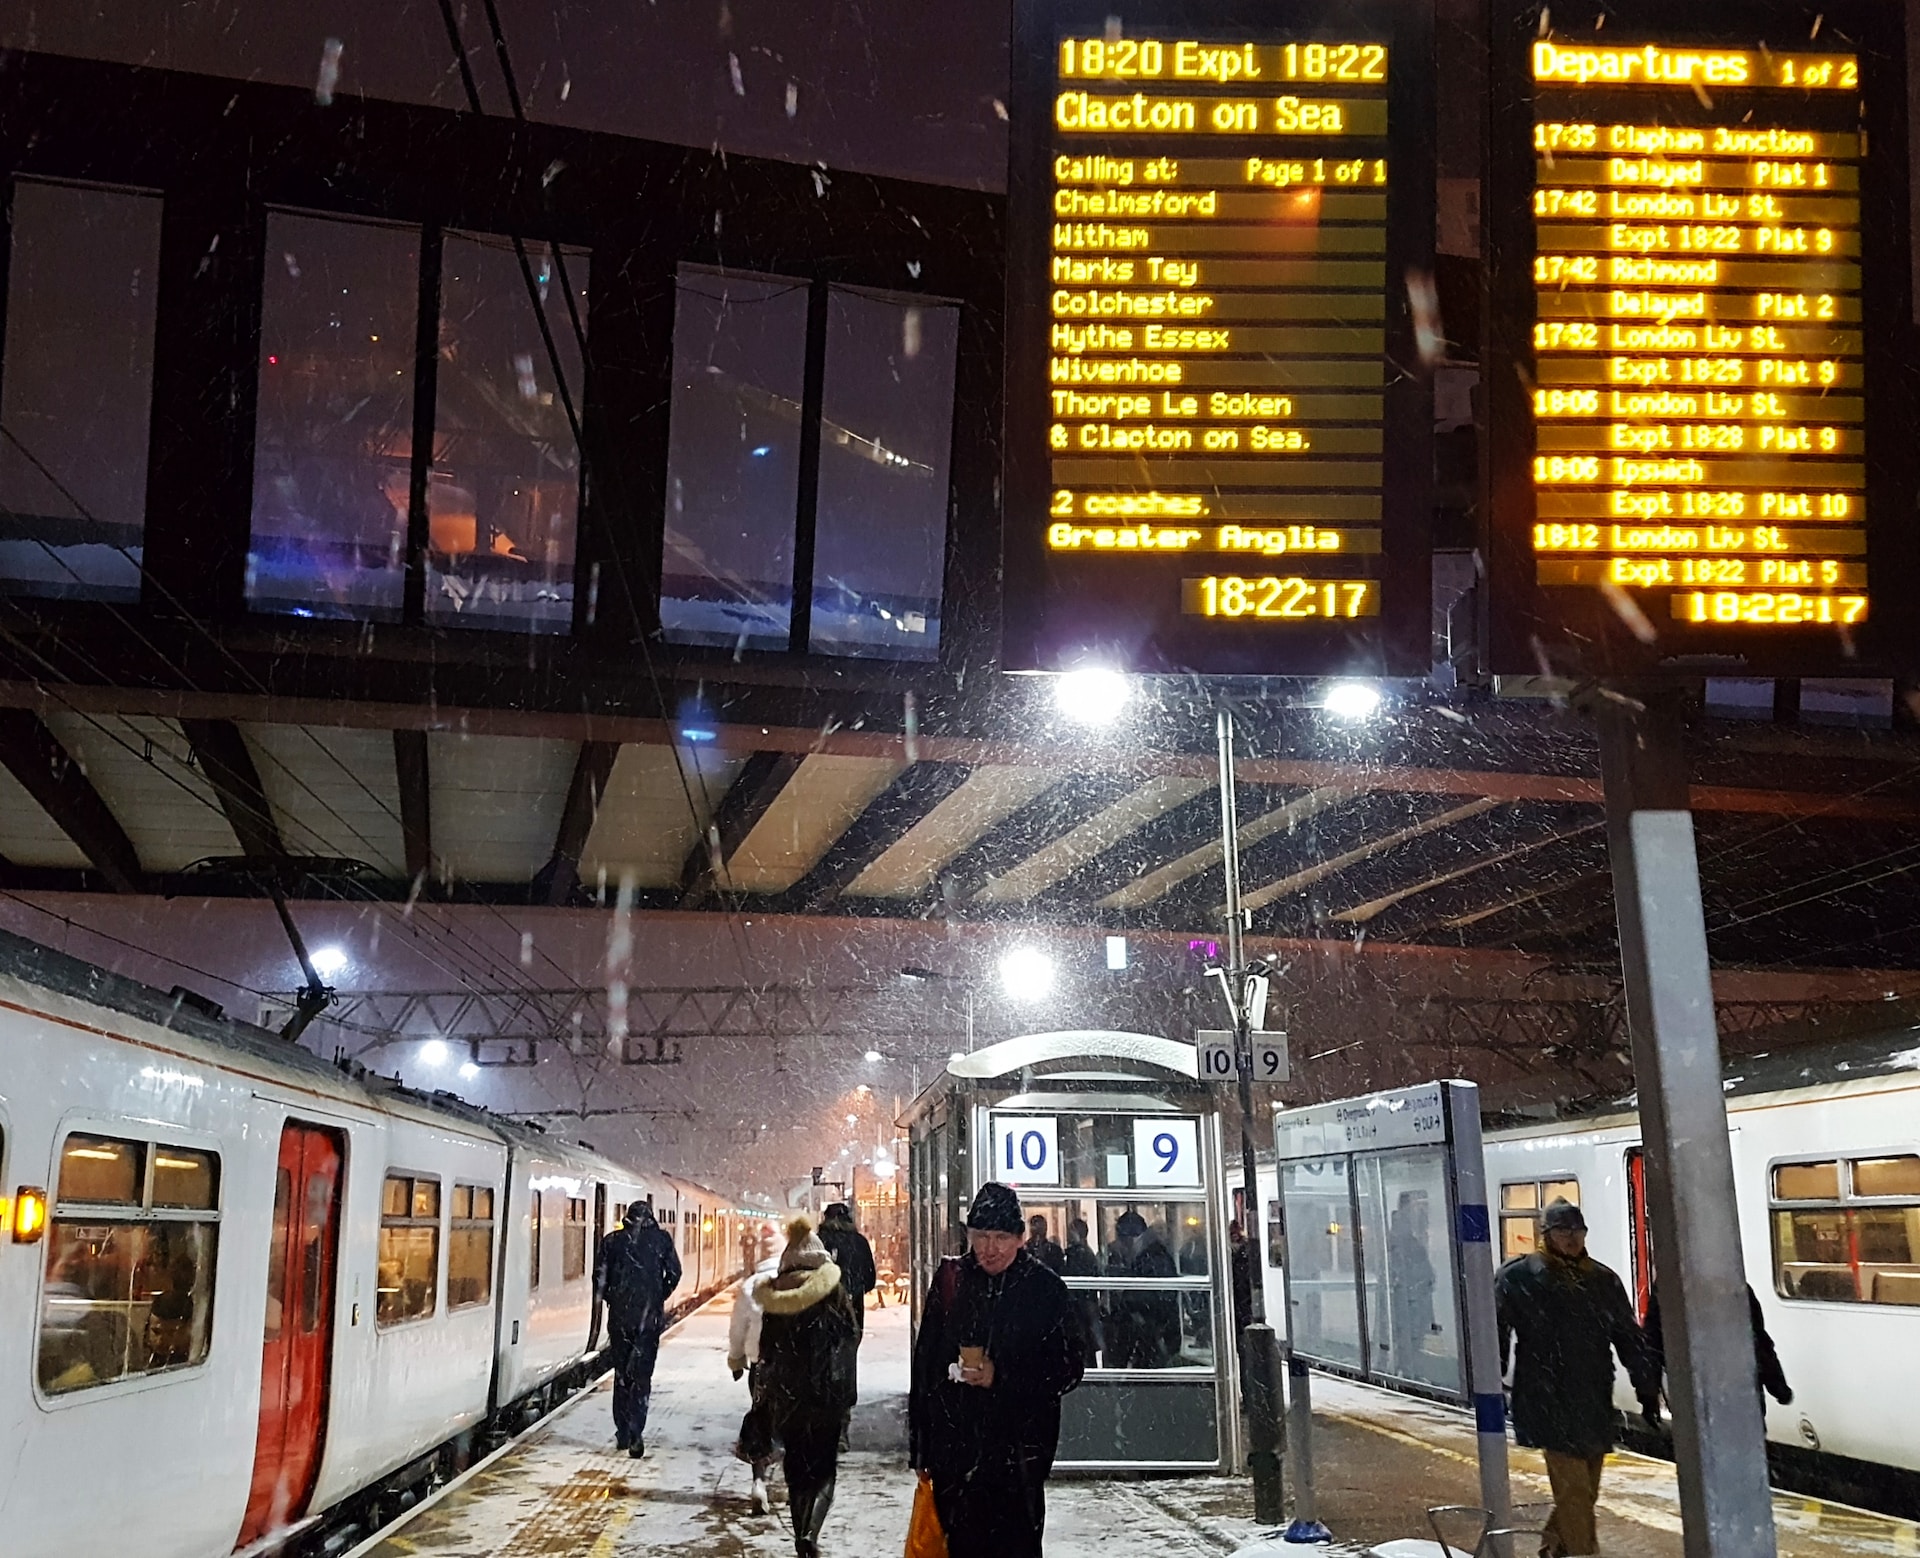 People waiting on a snowy train platform